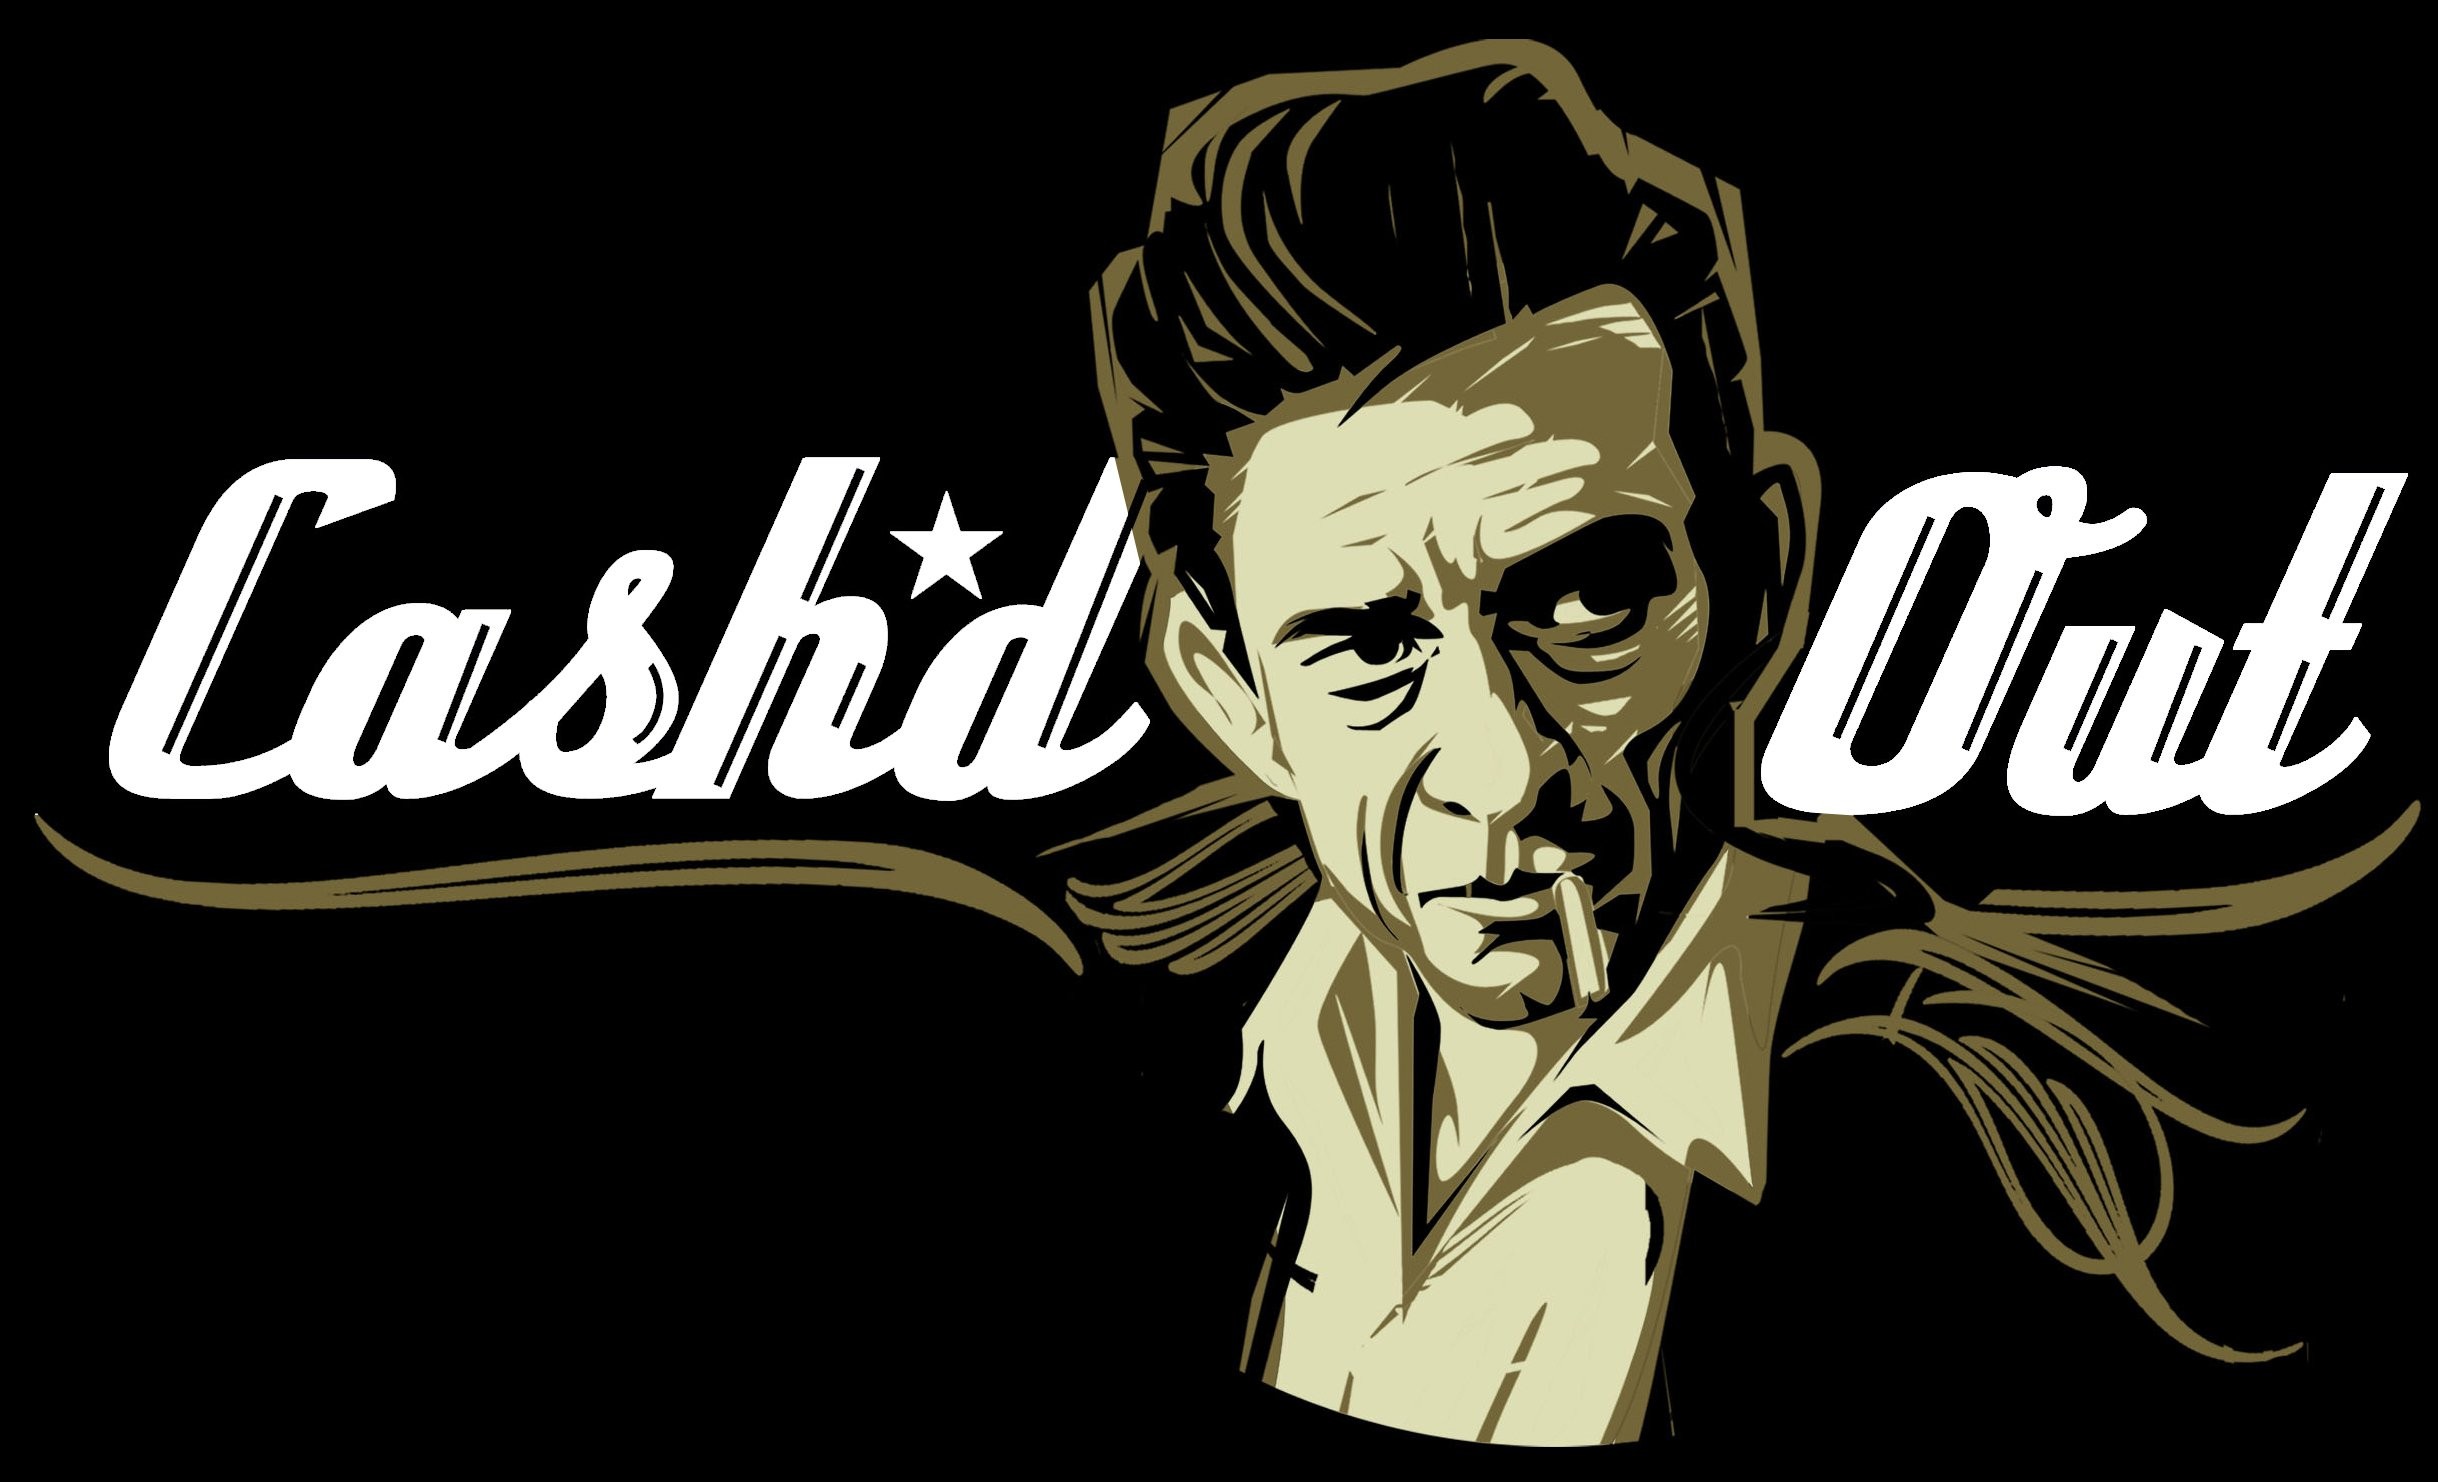 Johnny Cash Cashd Out - HD Wallpaper 